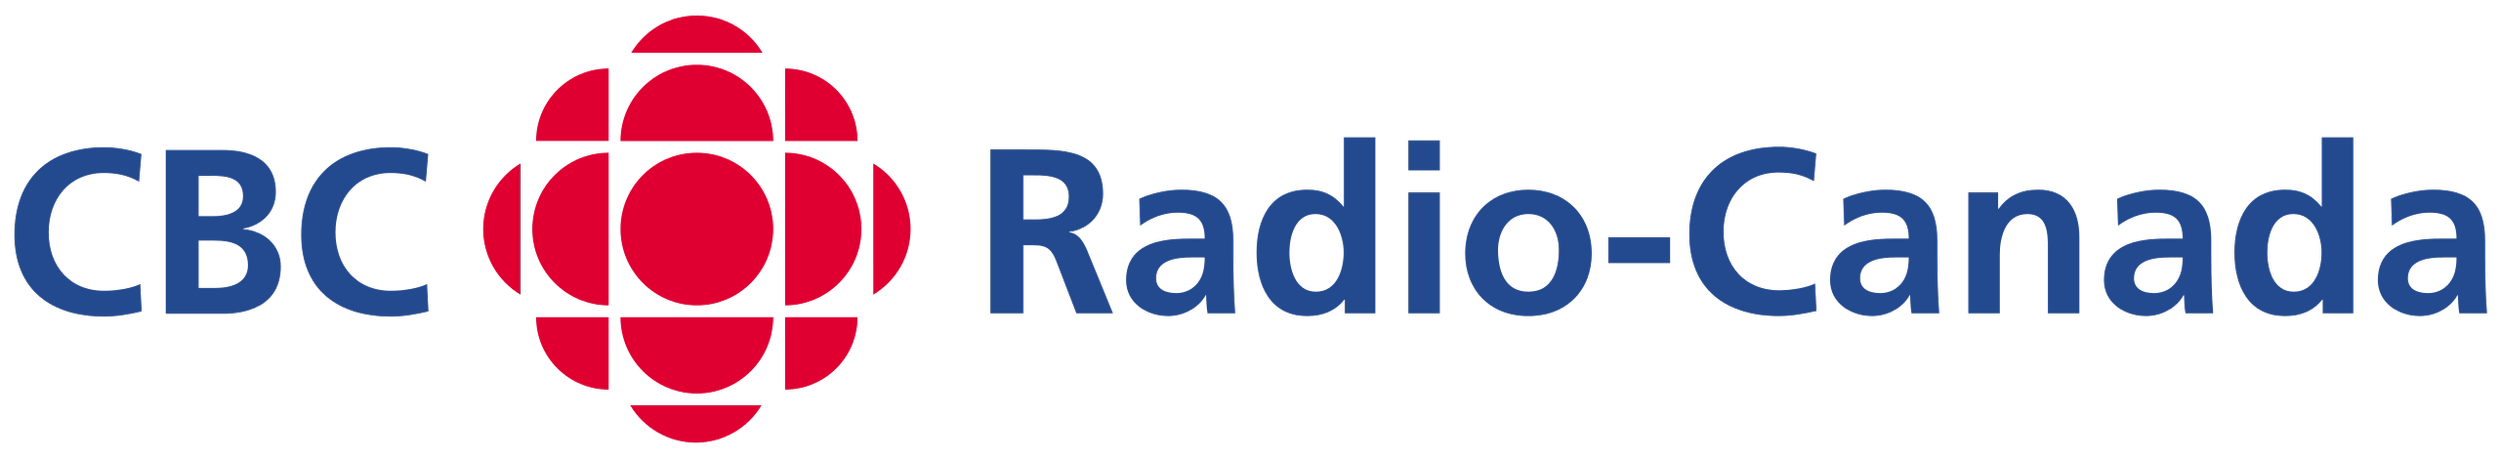 CBC_Radio-Canada_logo.svg.png